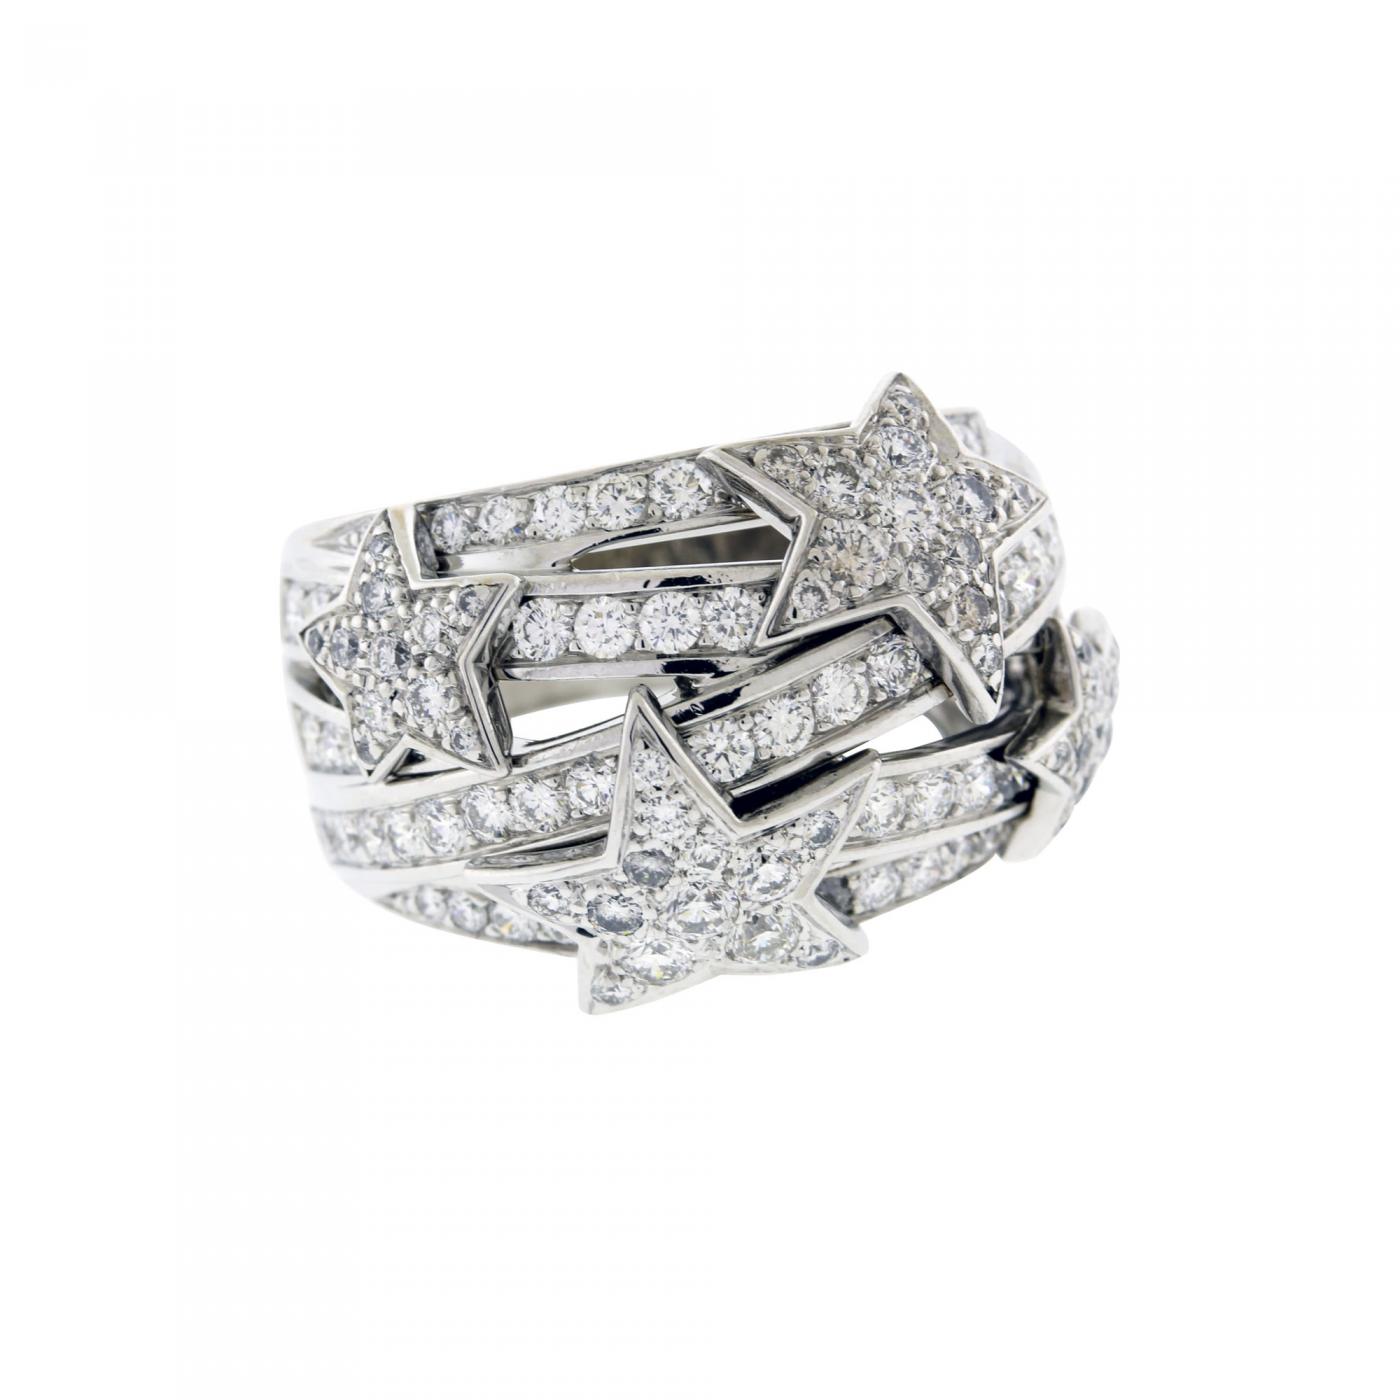 Chanel - Chanel's Comète Diamond Star Dome Ring in White Gold